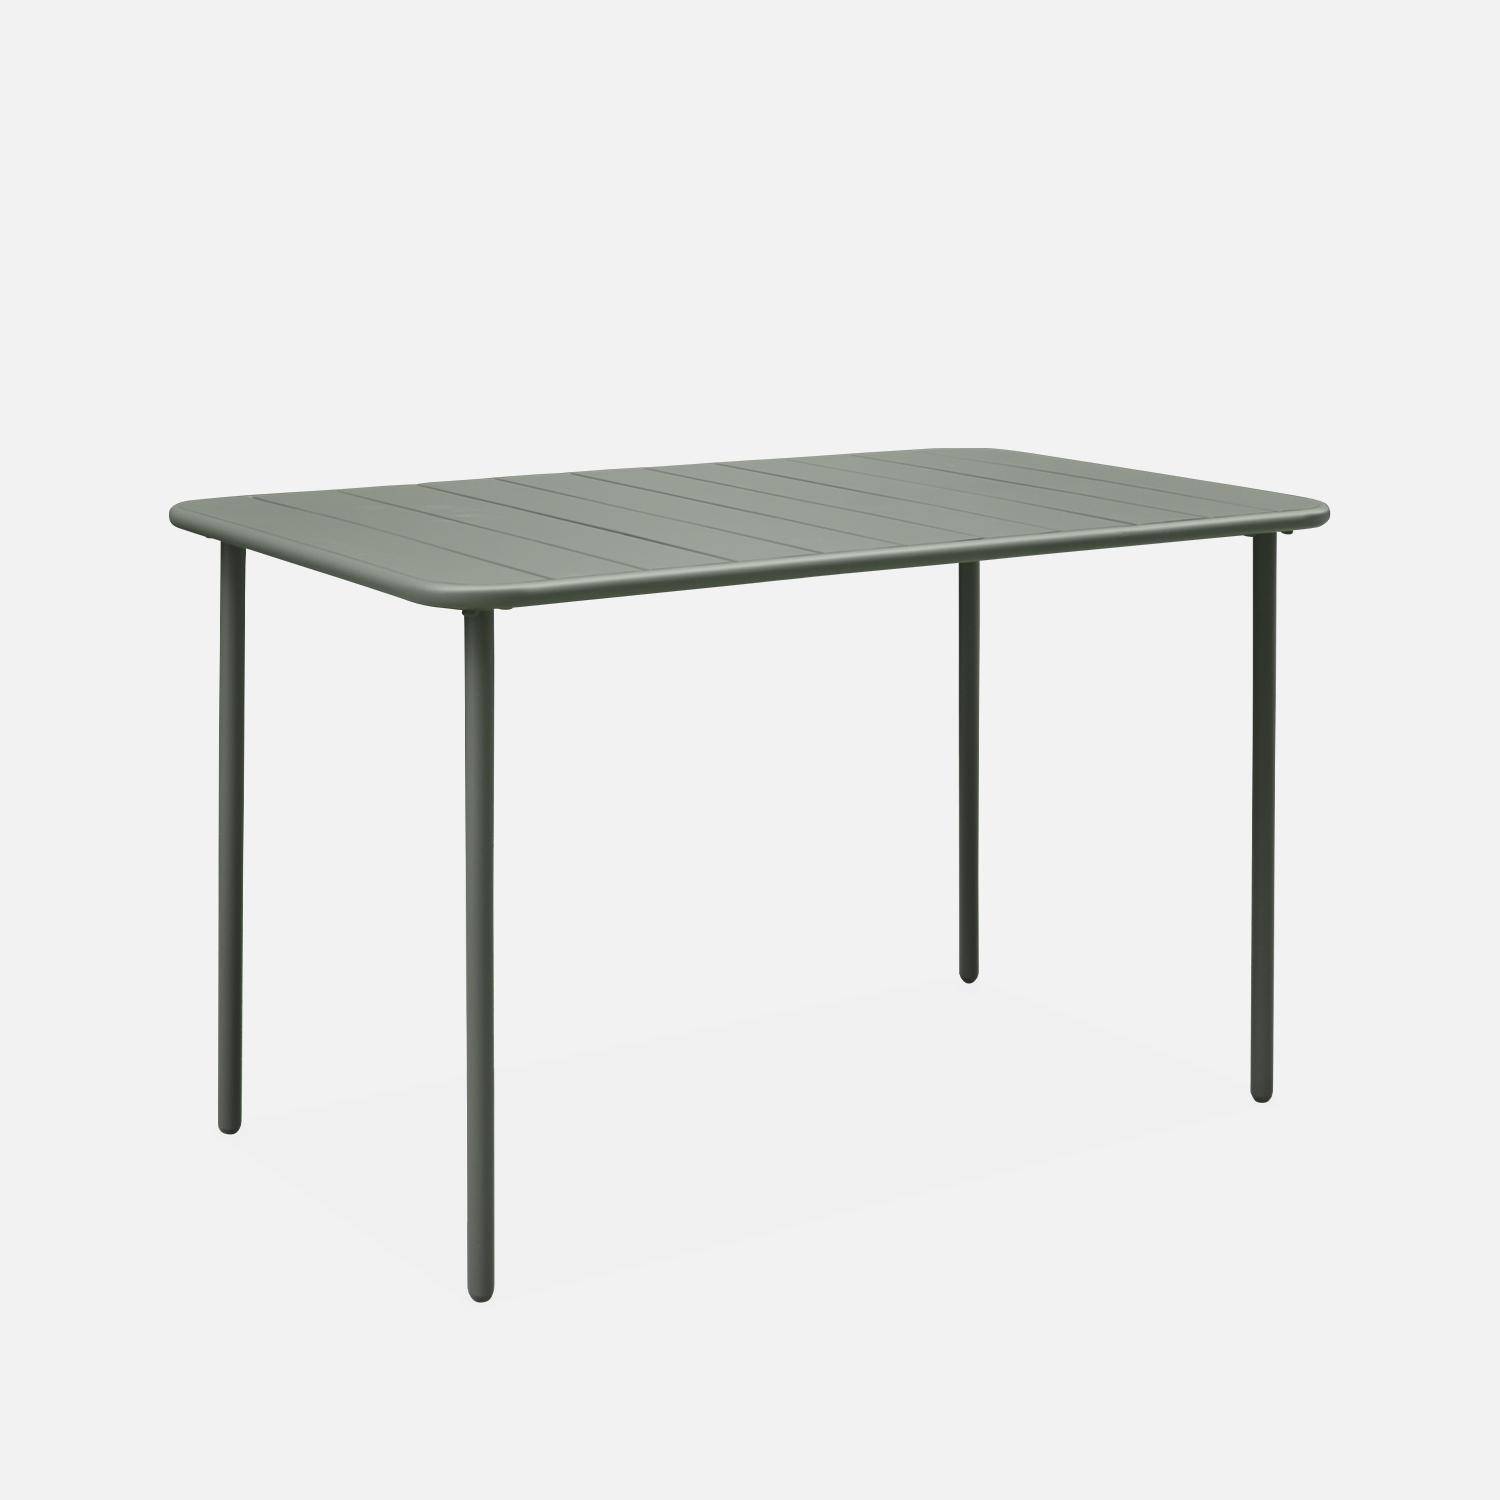 4-seater rectangular steel garden table, 120cm, Khaki Green,sweeek,Photo5